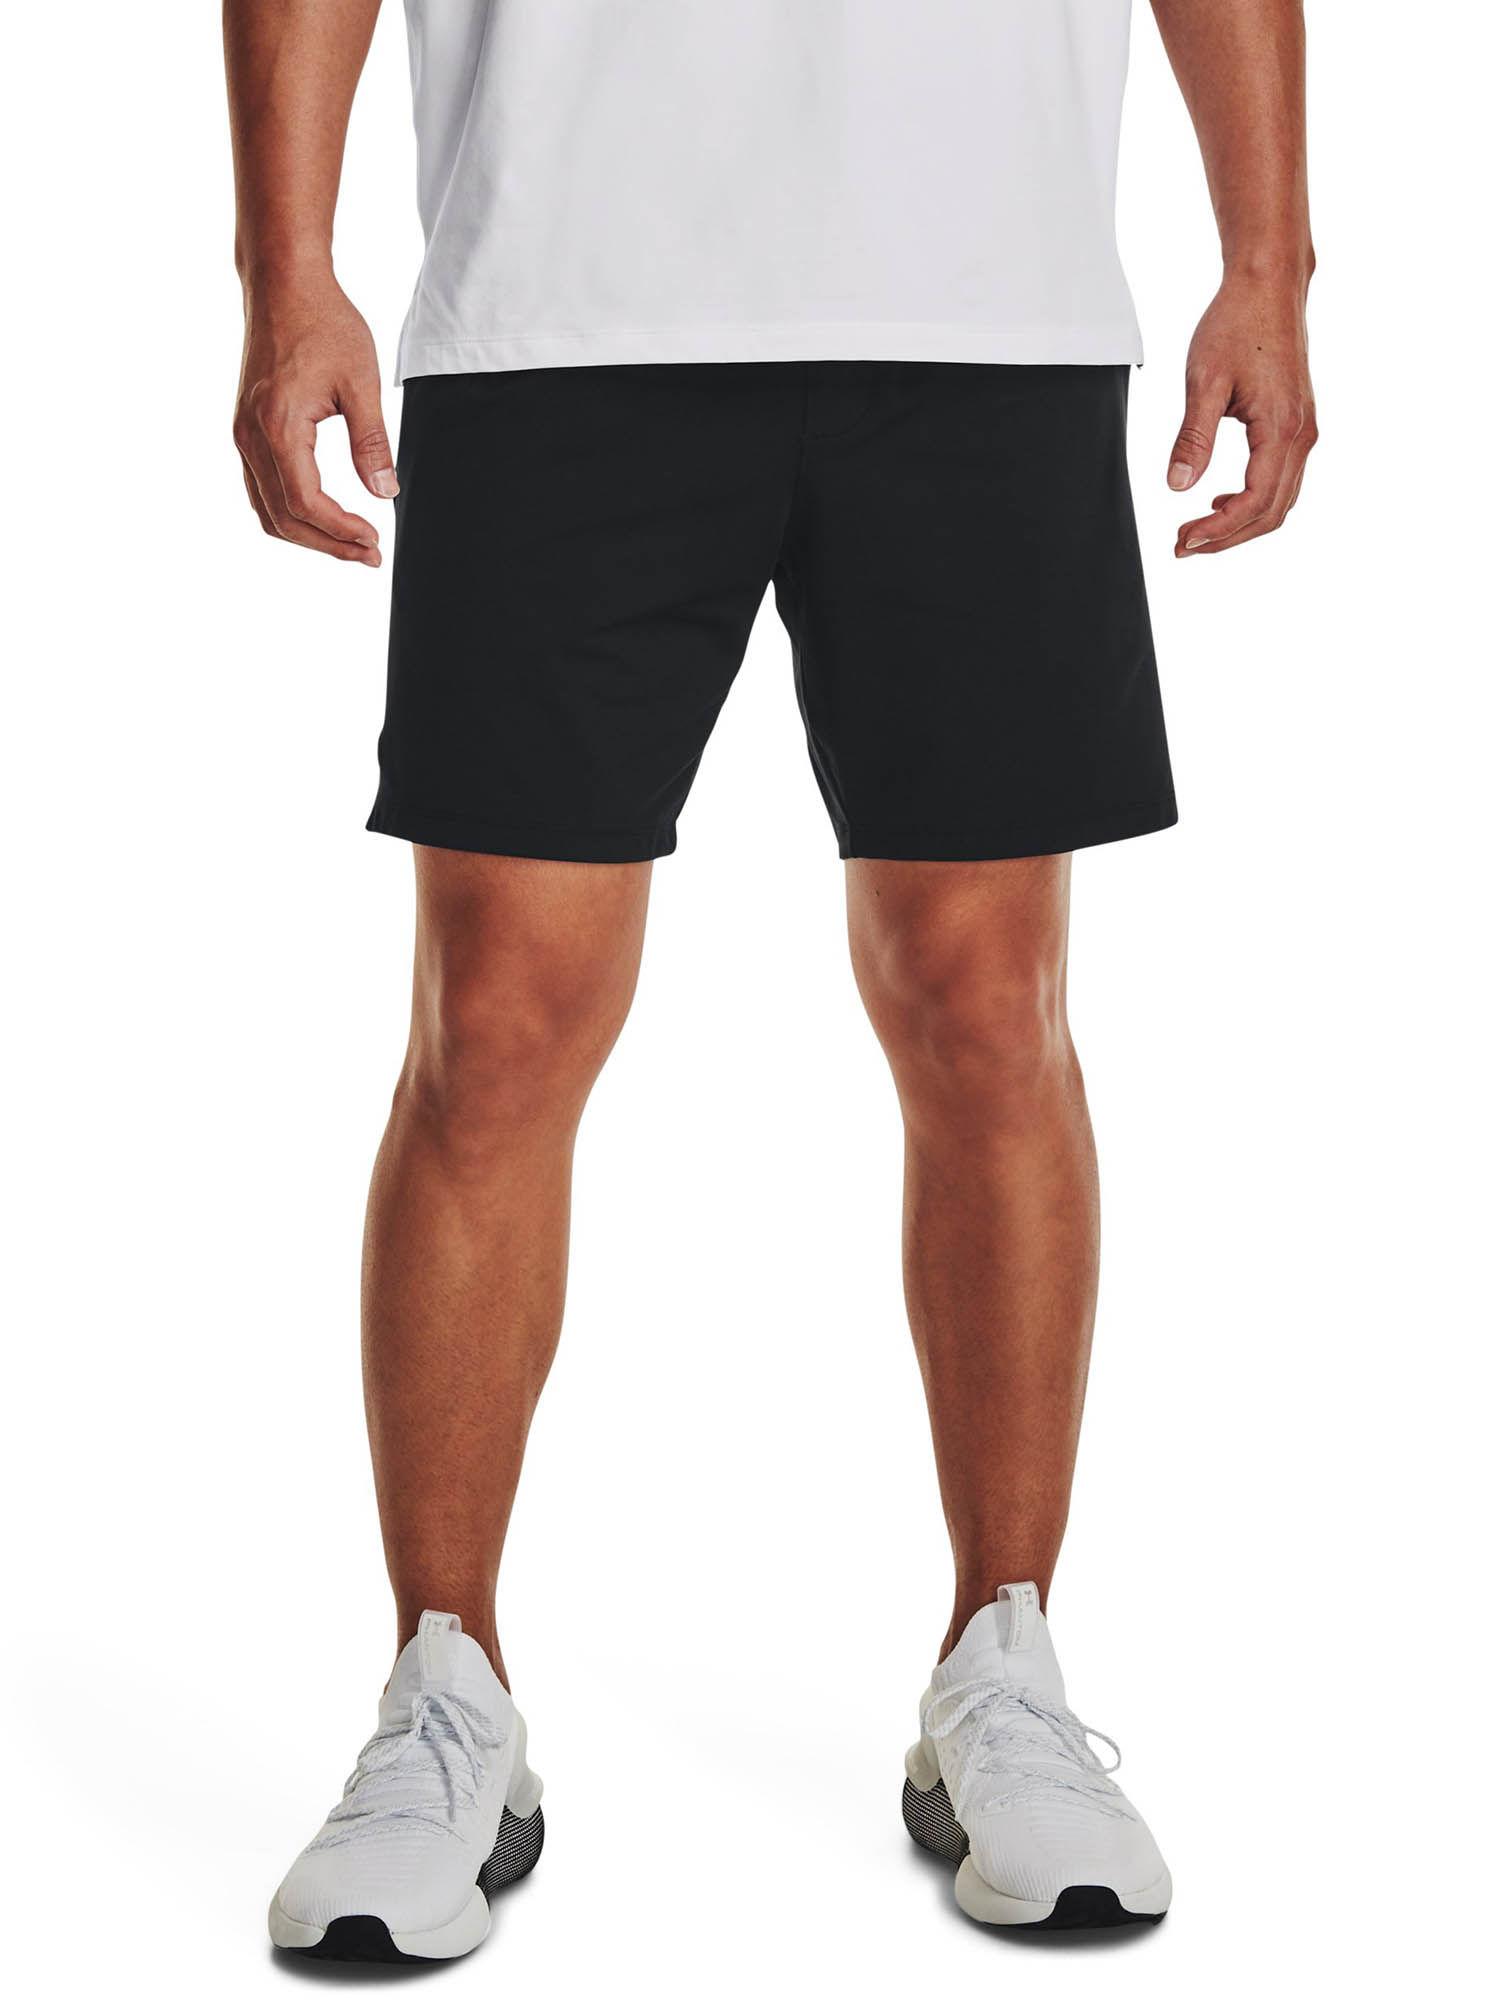 meridian shorts